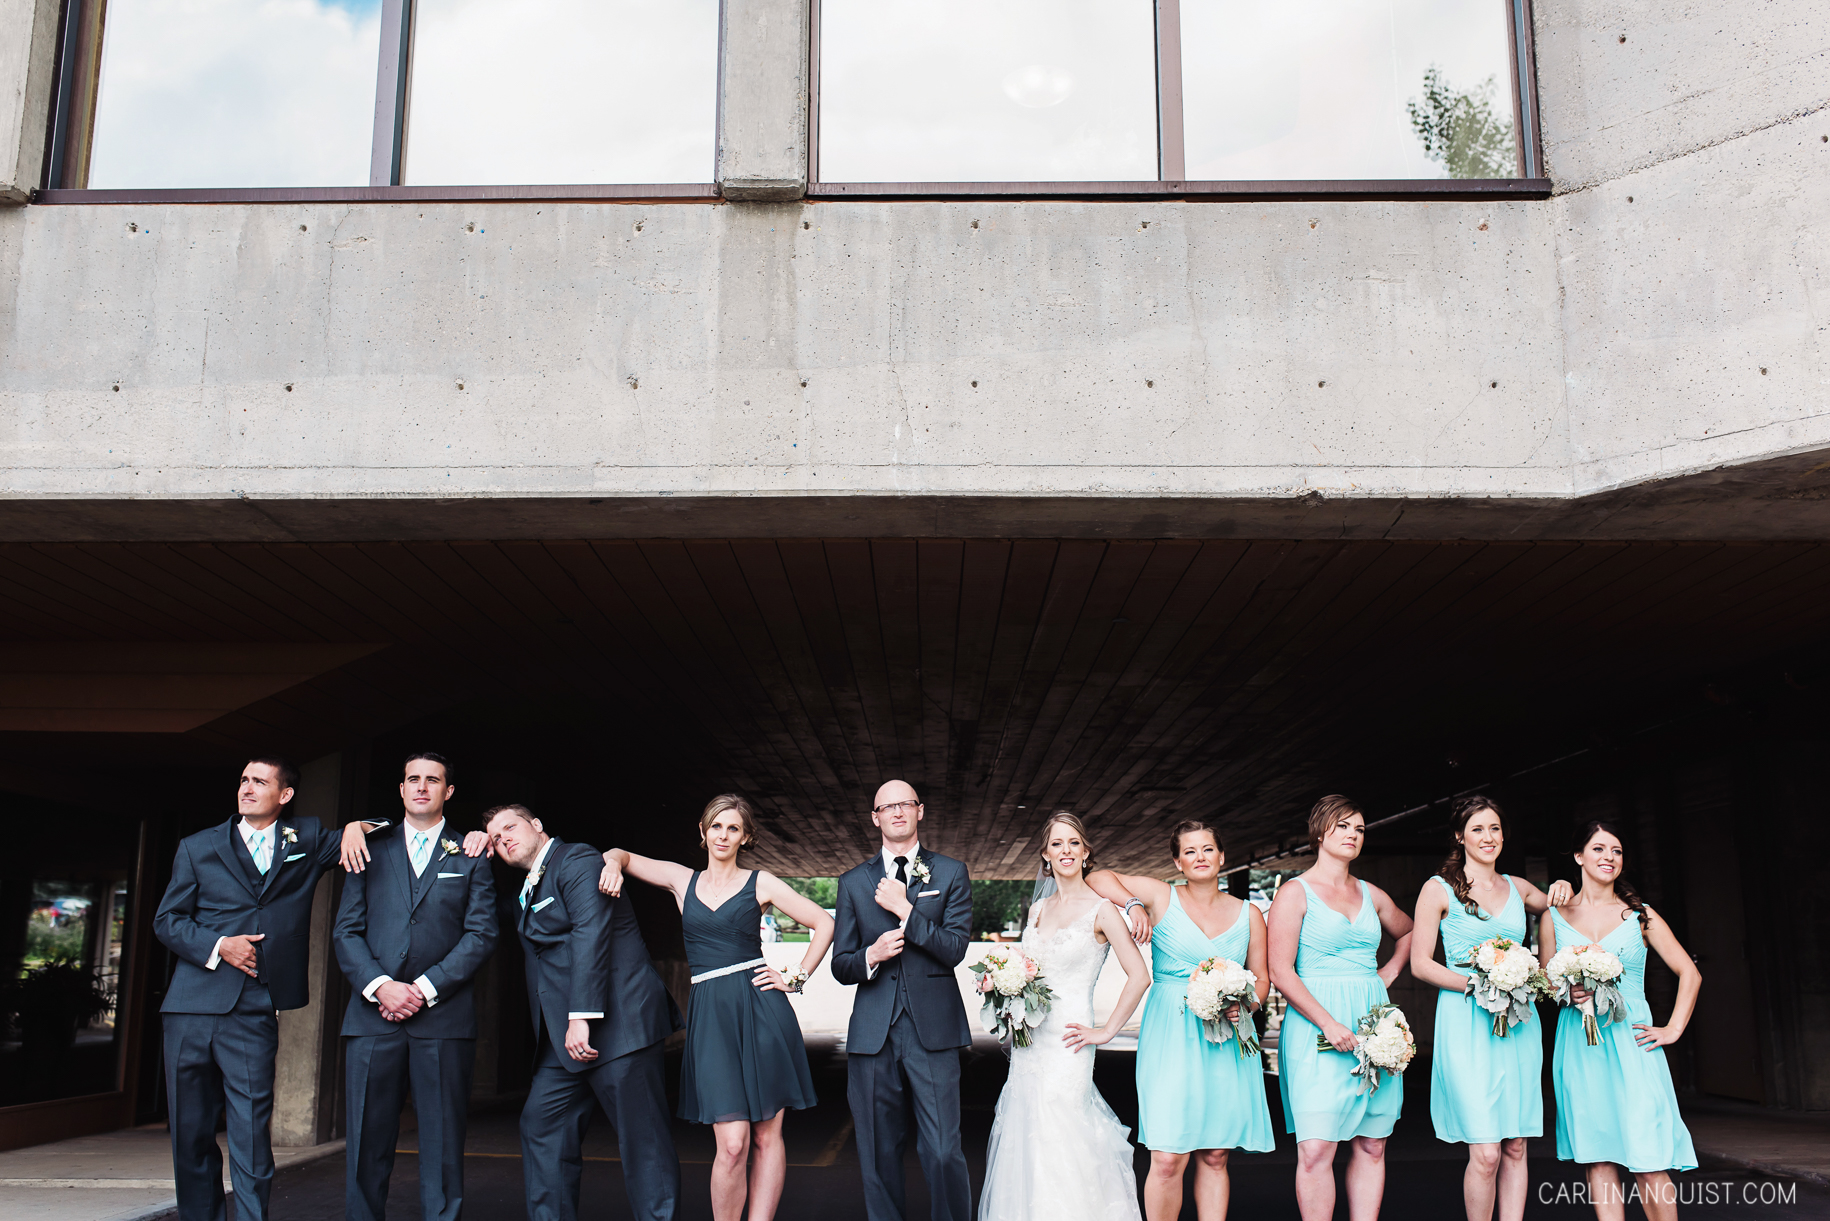 Bridal Party Photos | Pinebrook Golf Course Wedding Photographer